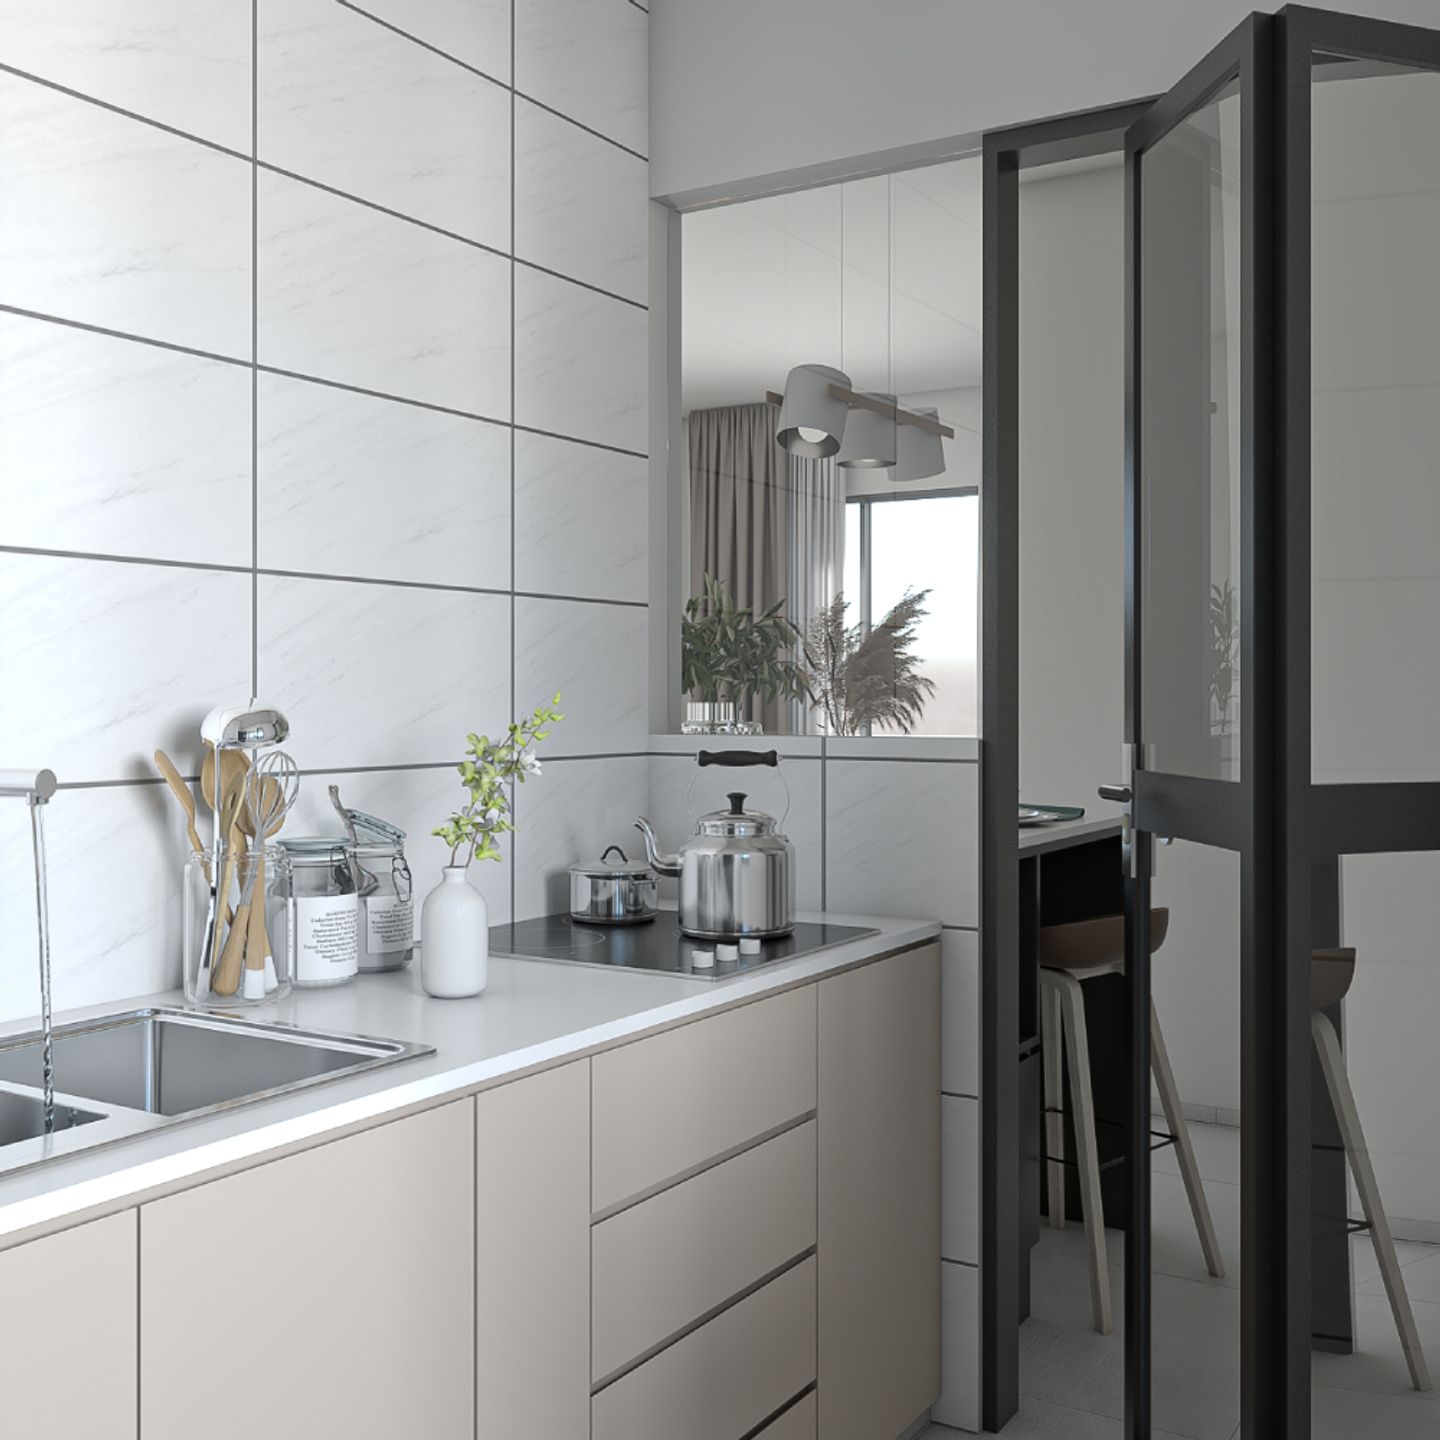 Minimalist Kitchen Design With White Backsplash And Light Beige Cabinets - Livspace